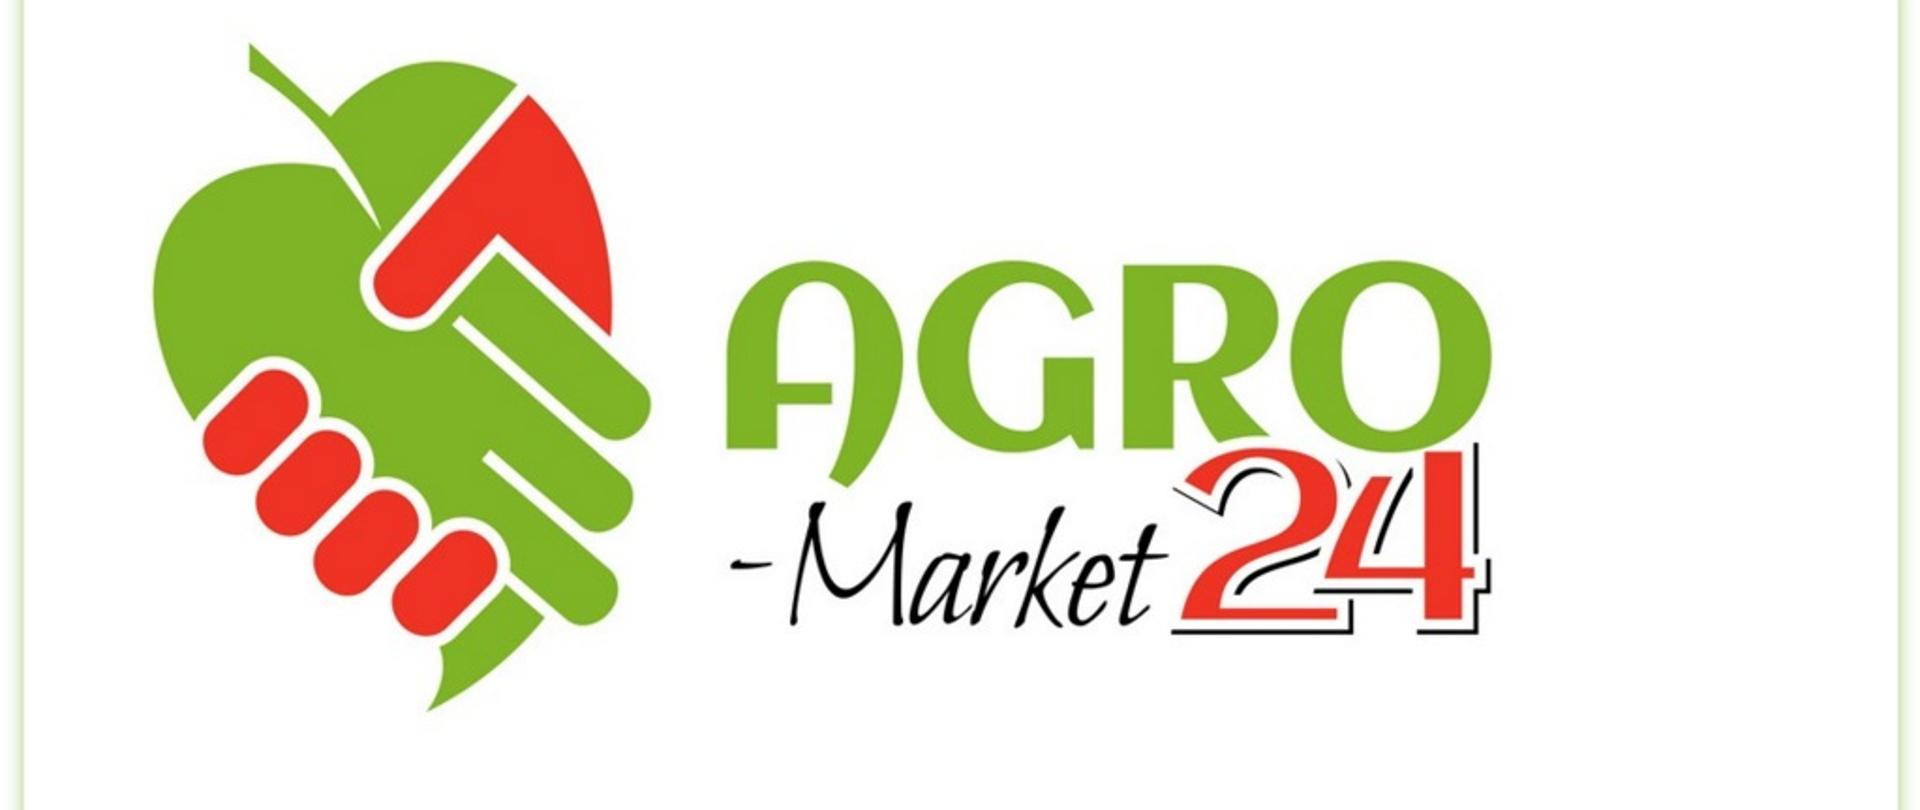 agro market 24 logo